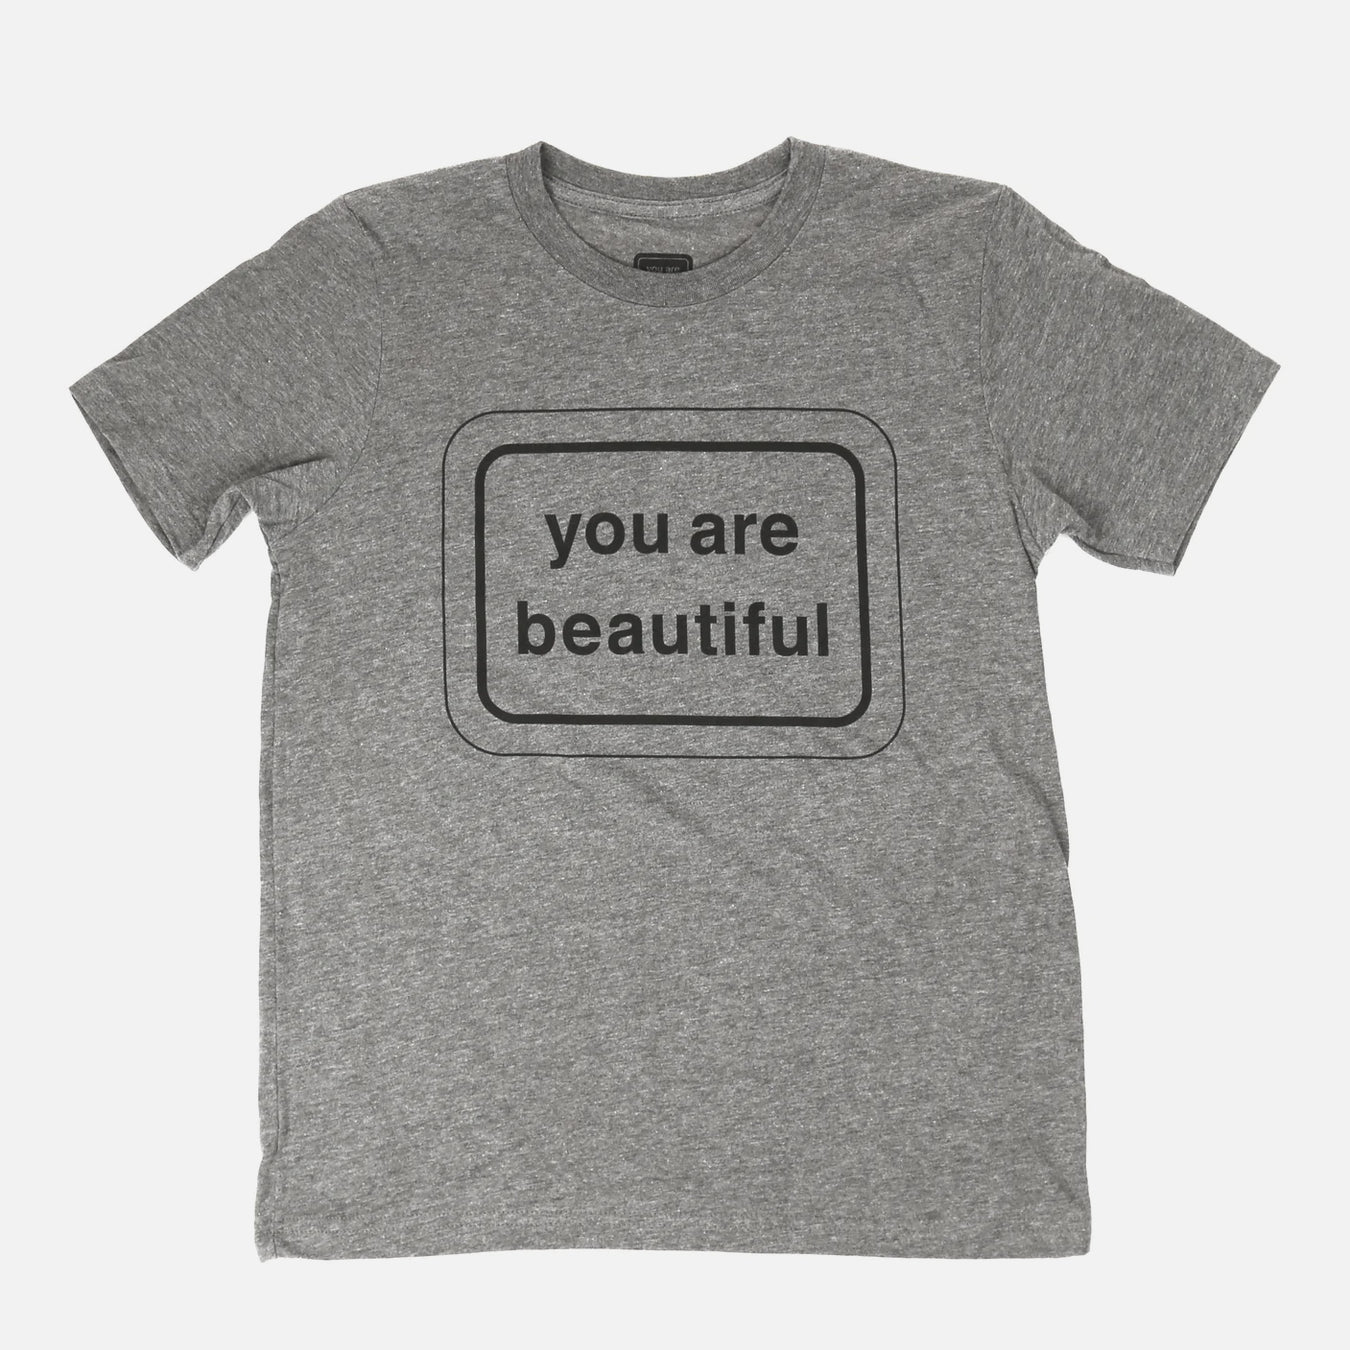 you are beautiful shirts